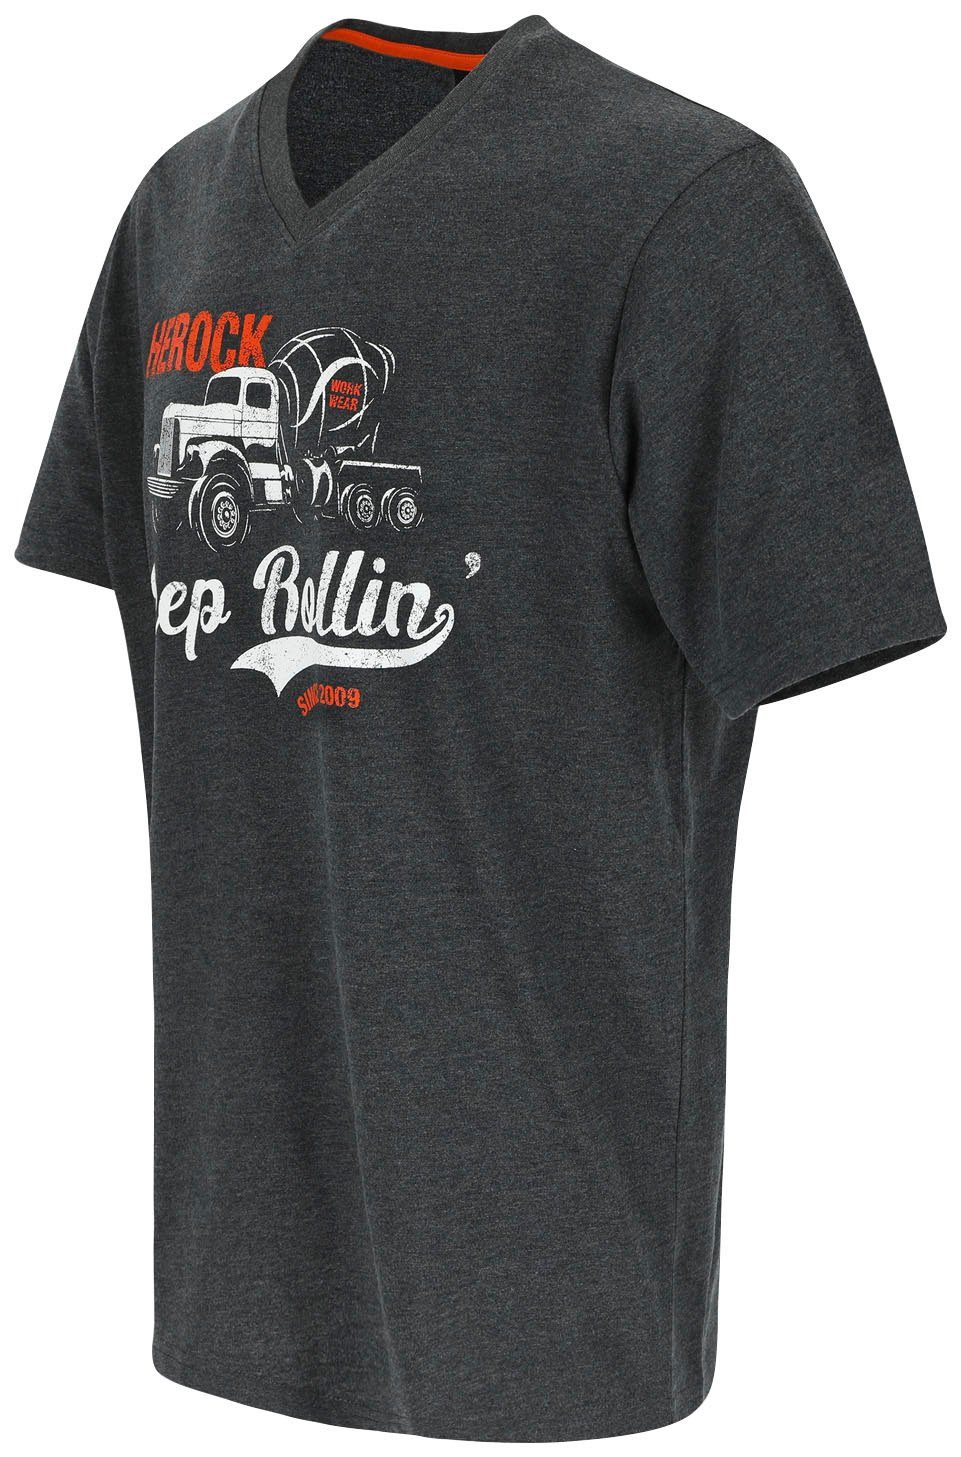 Herock Limited Rollin T-Shirt Edition